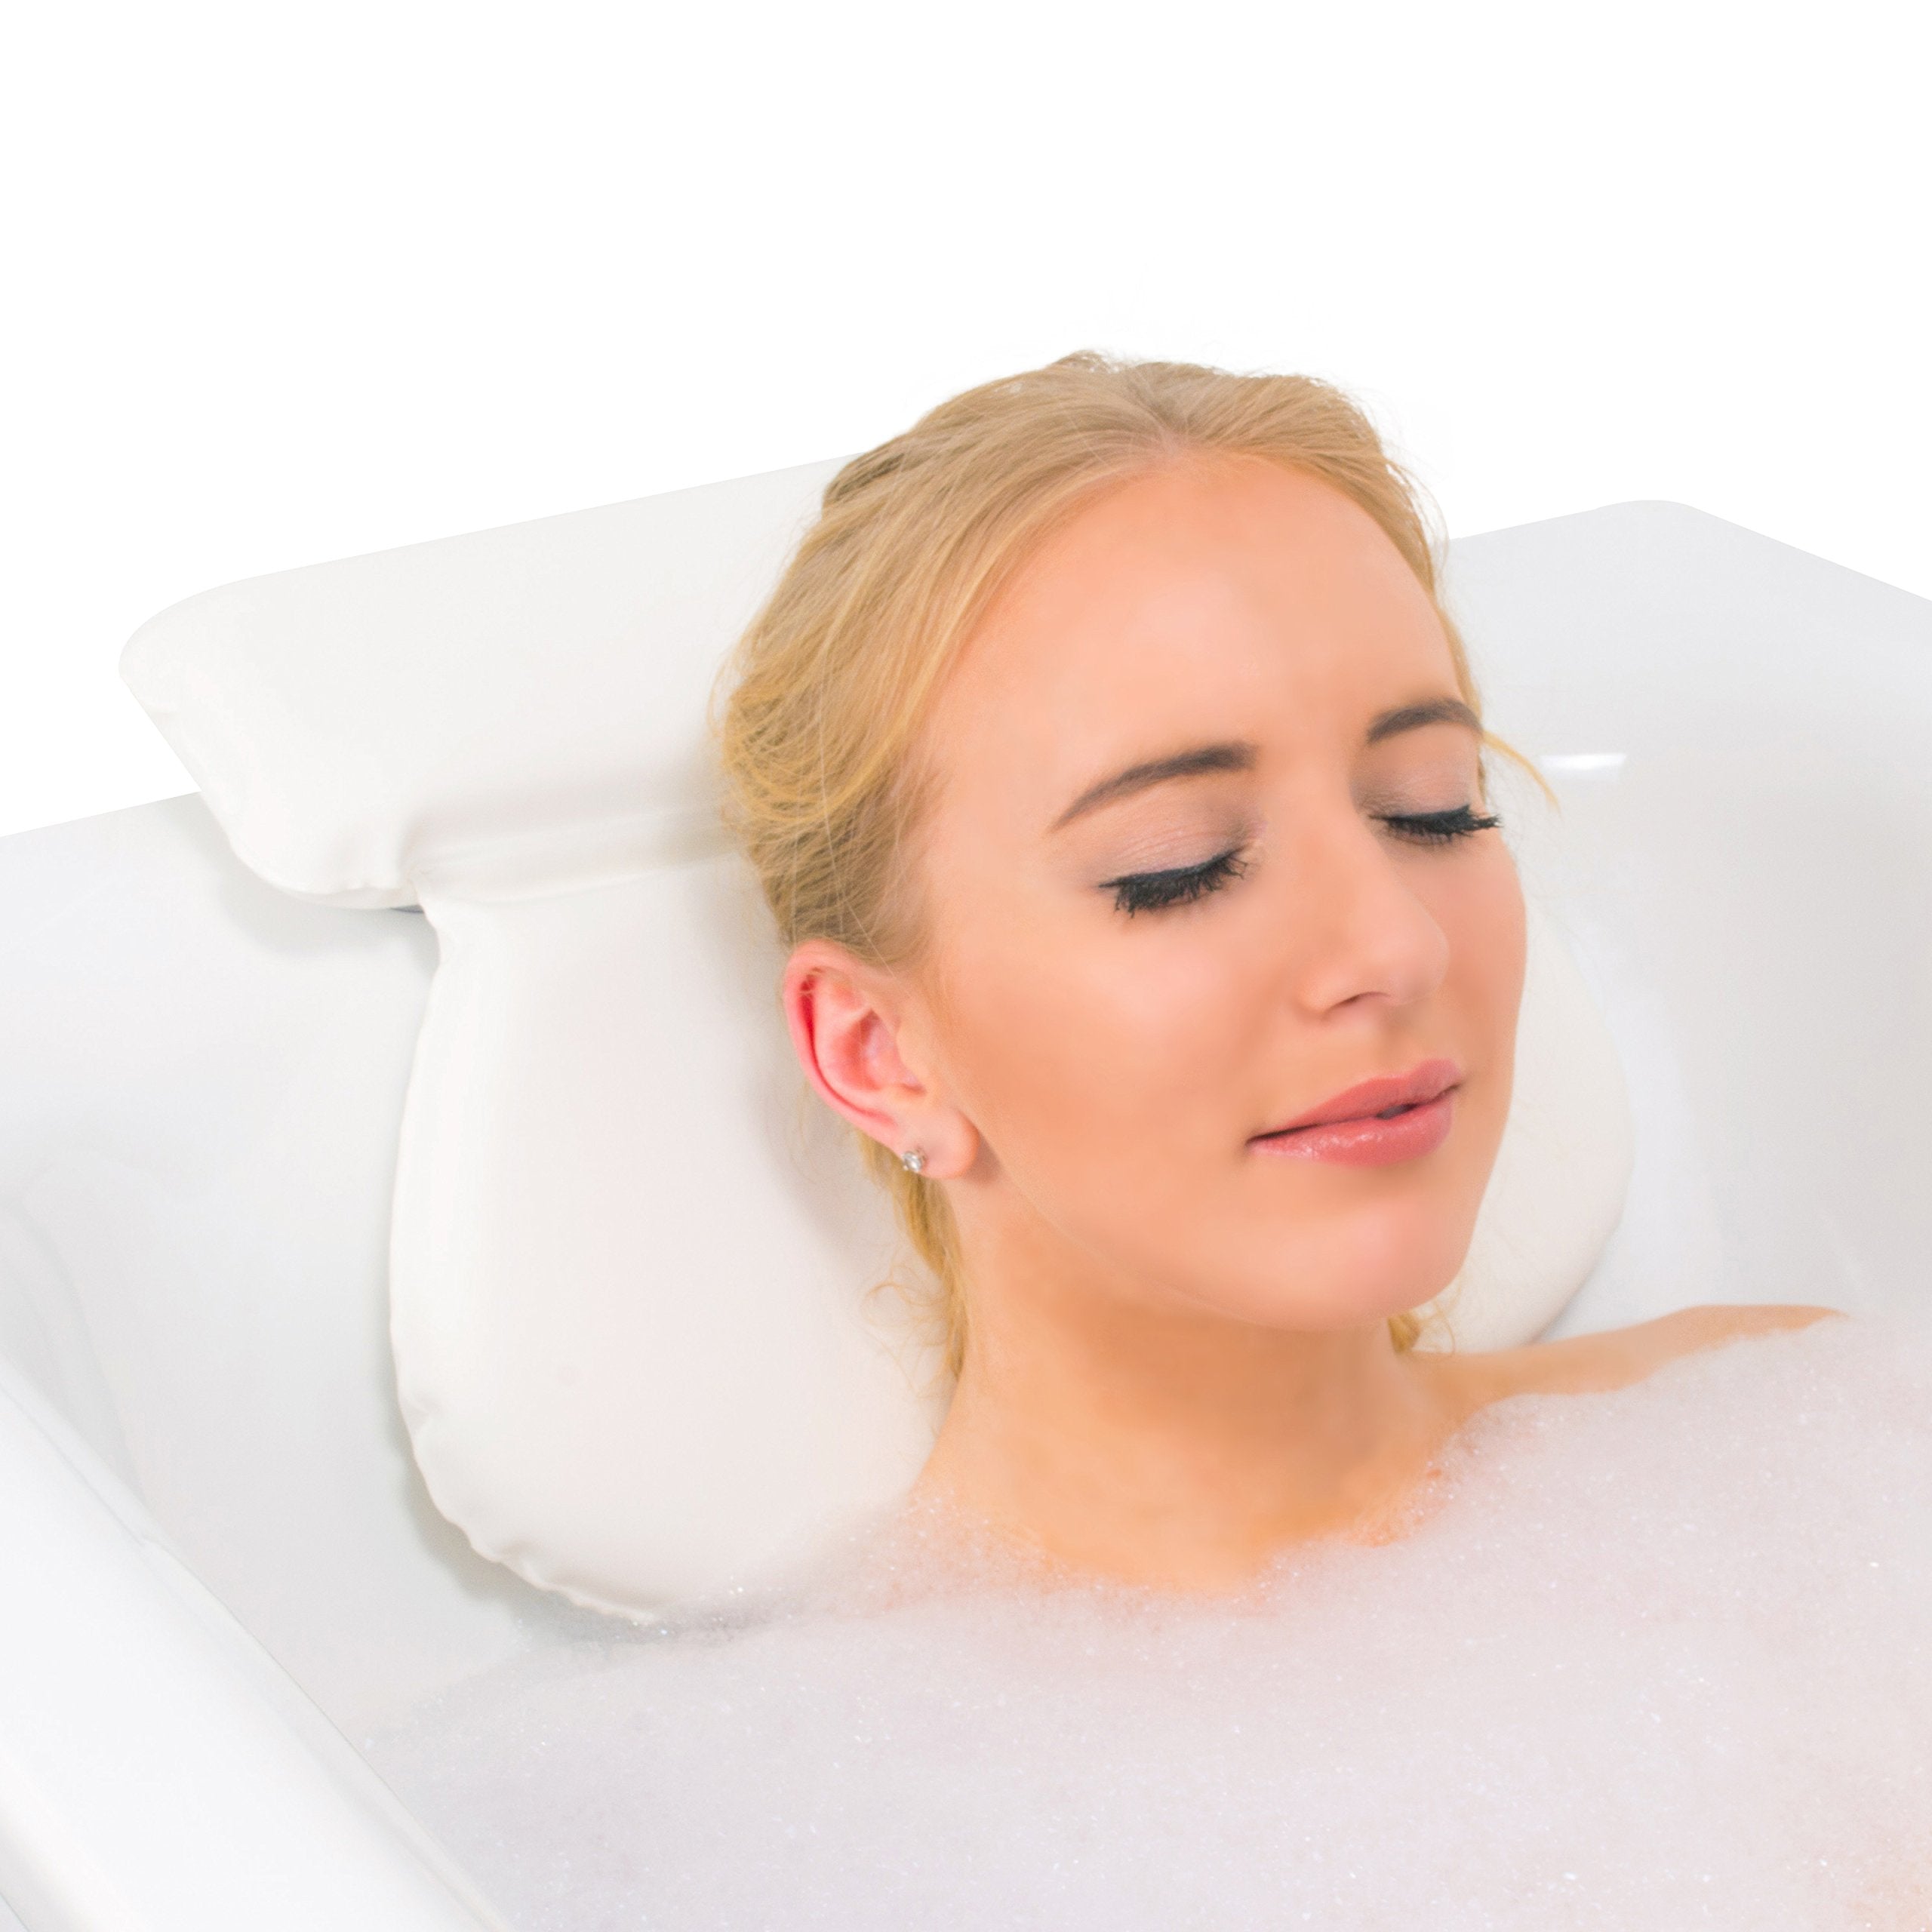 RELUX Premium Waterproof Bath Pillow Cushion with Non-Slip Suction Cups Ergonomic Home Spa Headrest